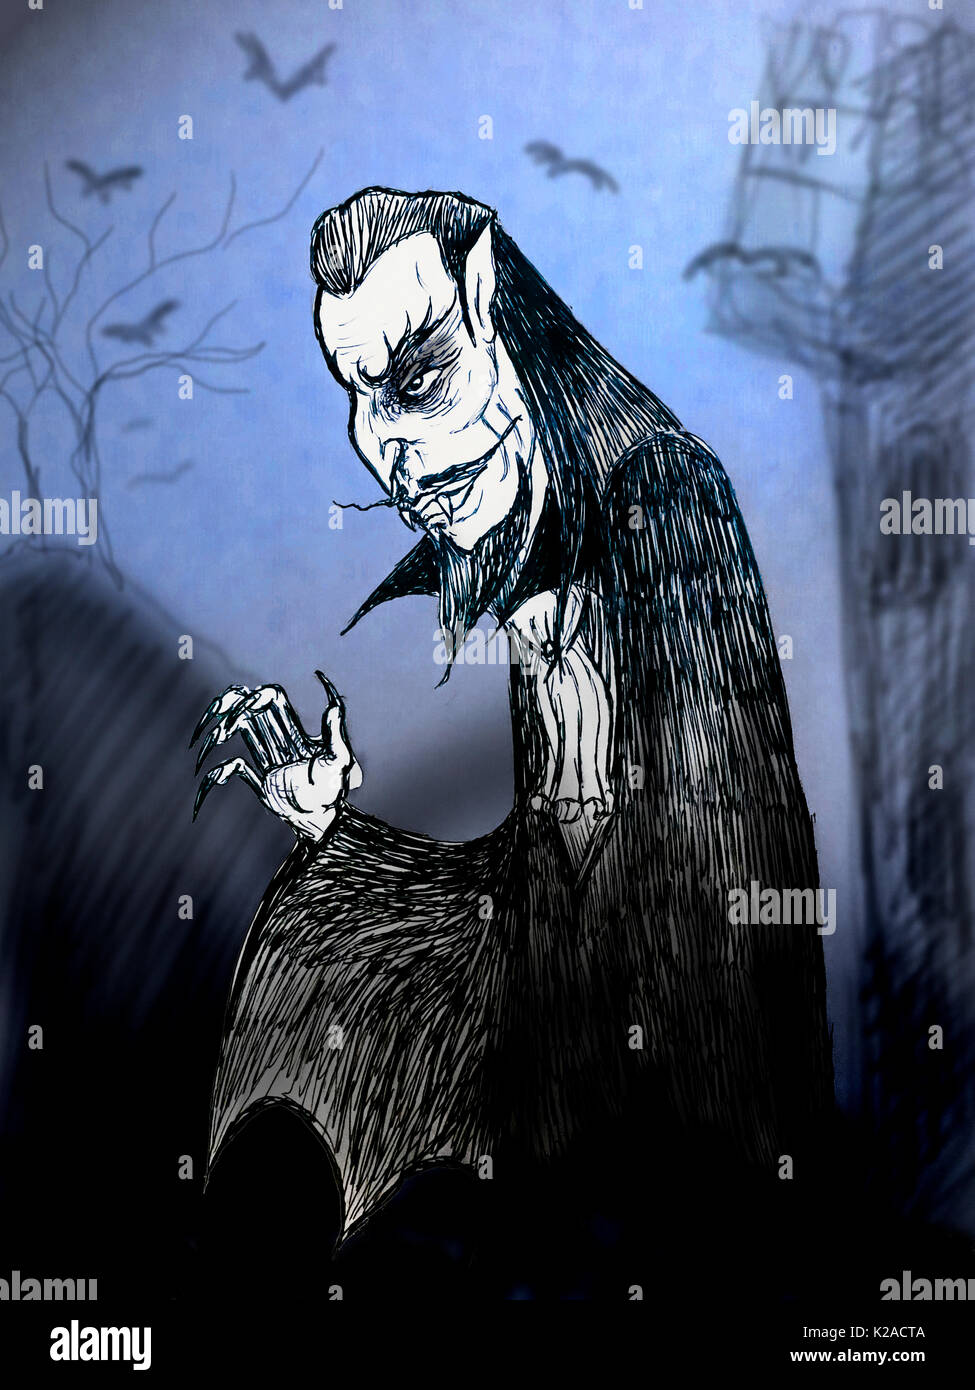 A vampire illustration Stock Photo